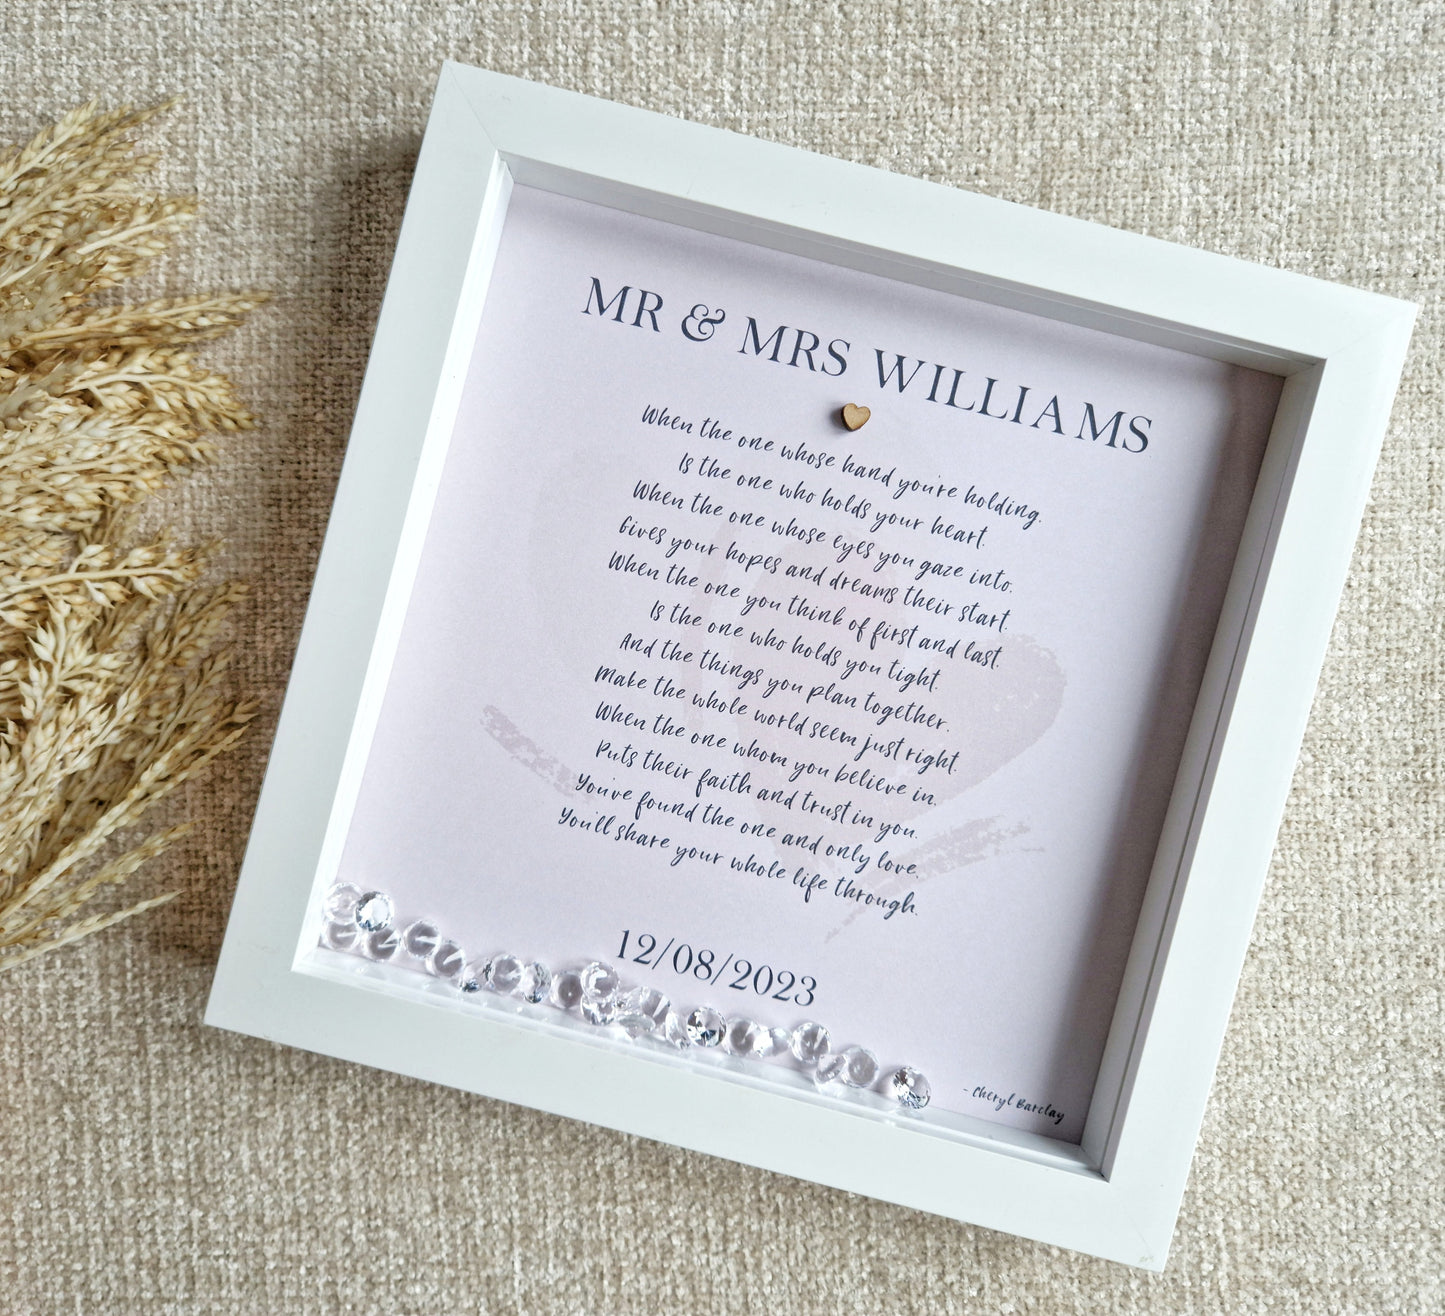 Personalised Wedding gift frame